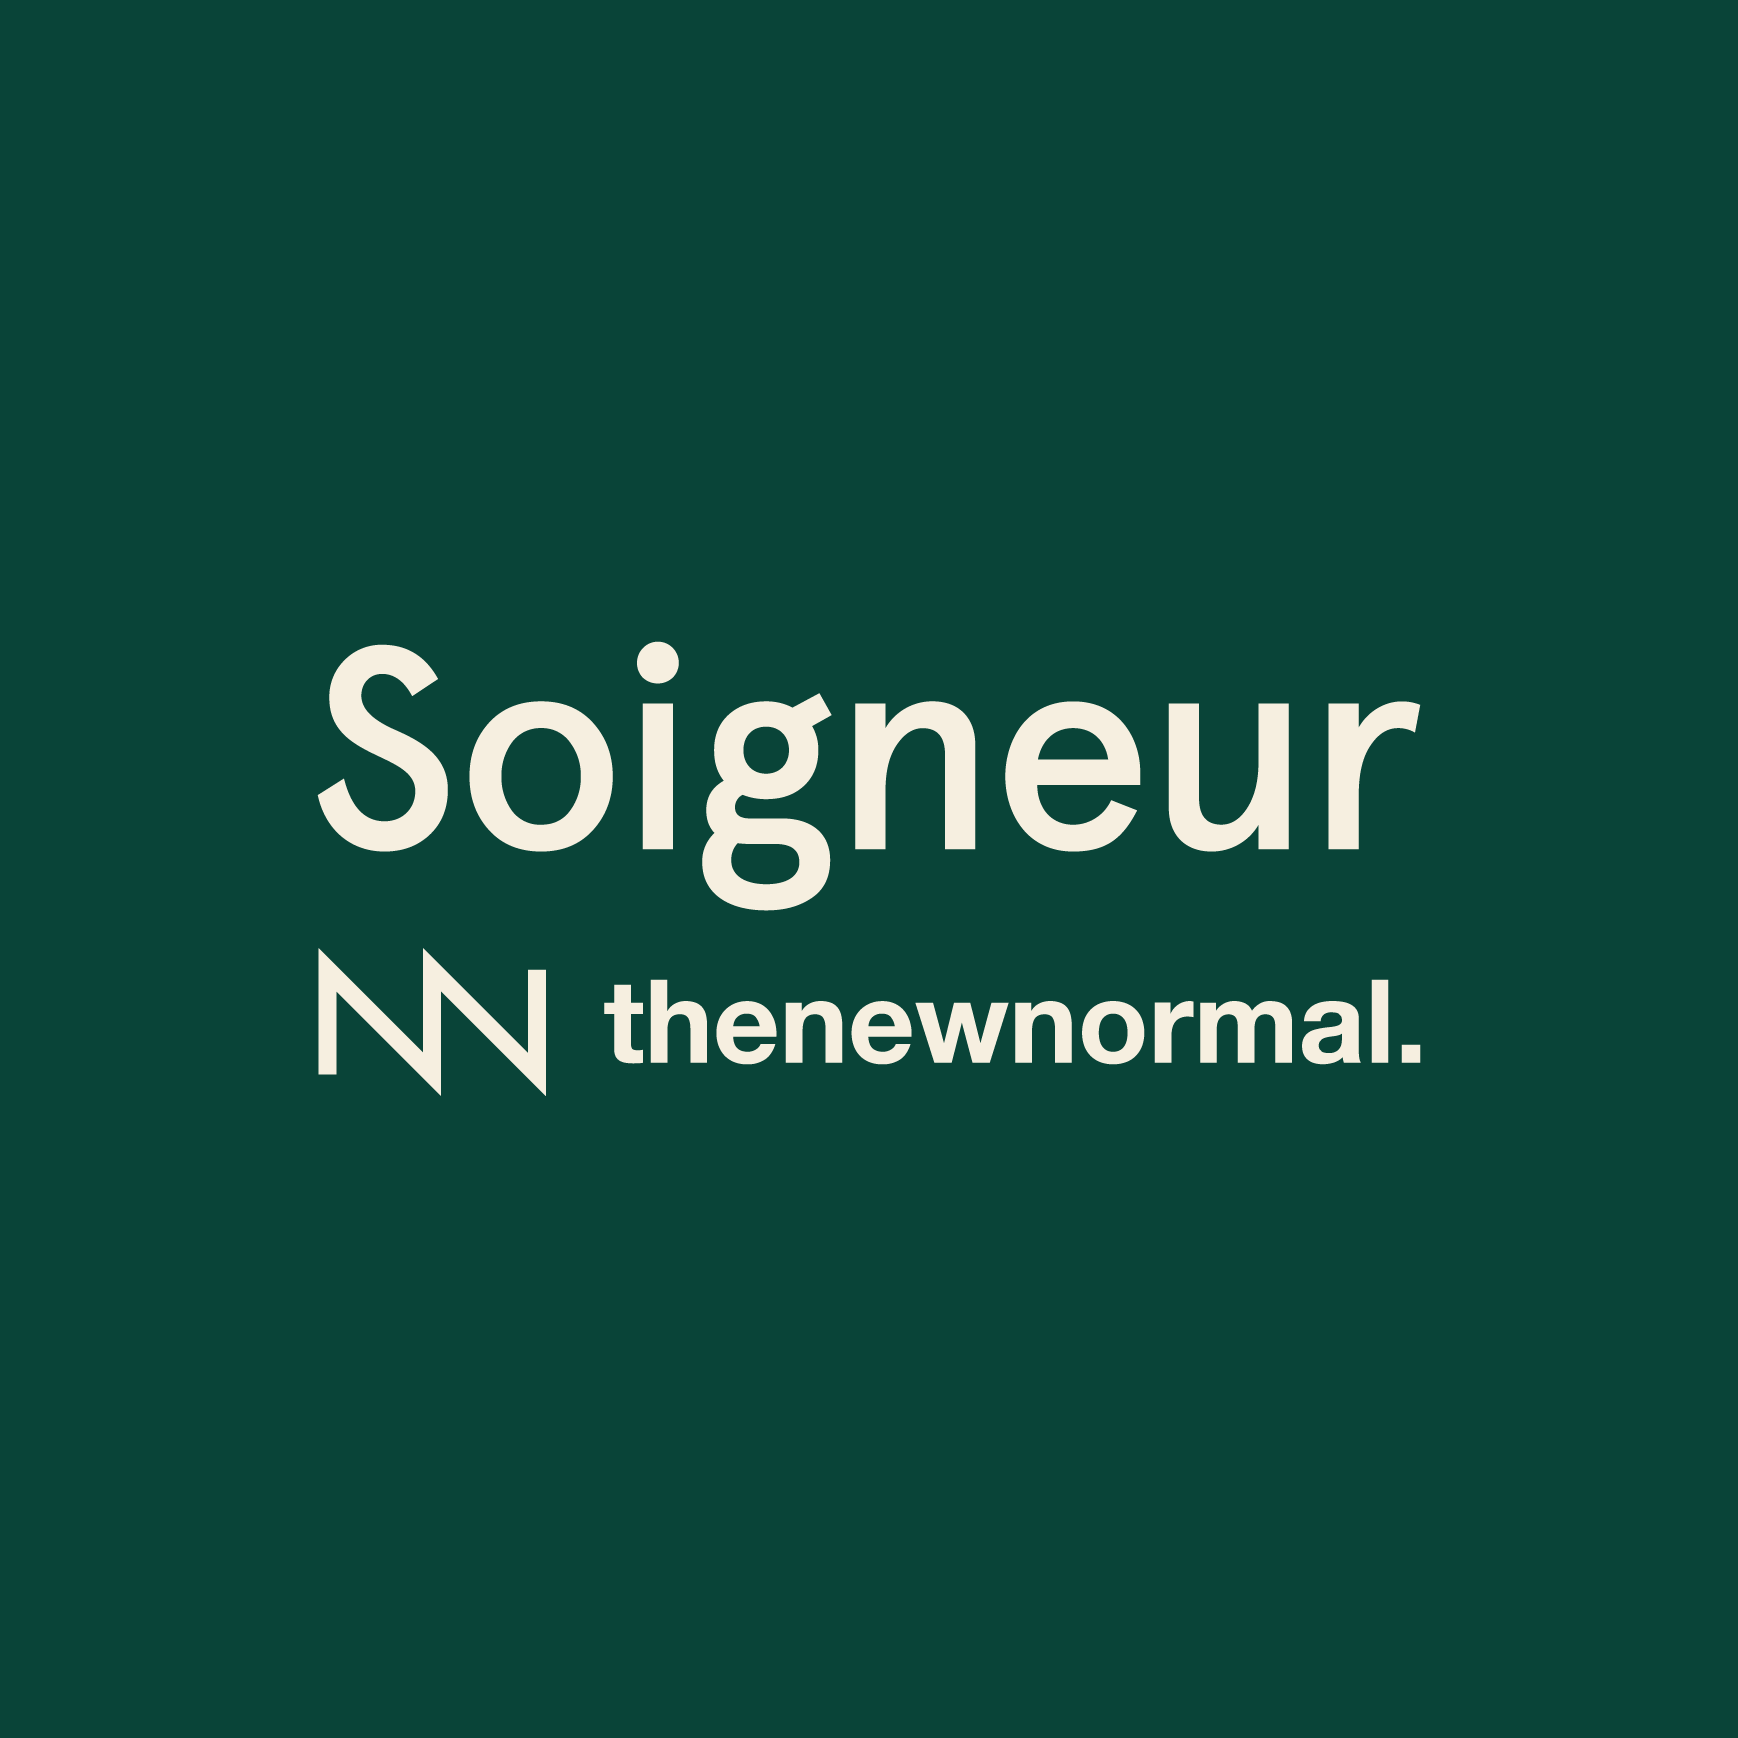 Club Image for SOIGNEUR